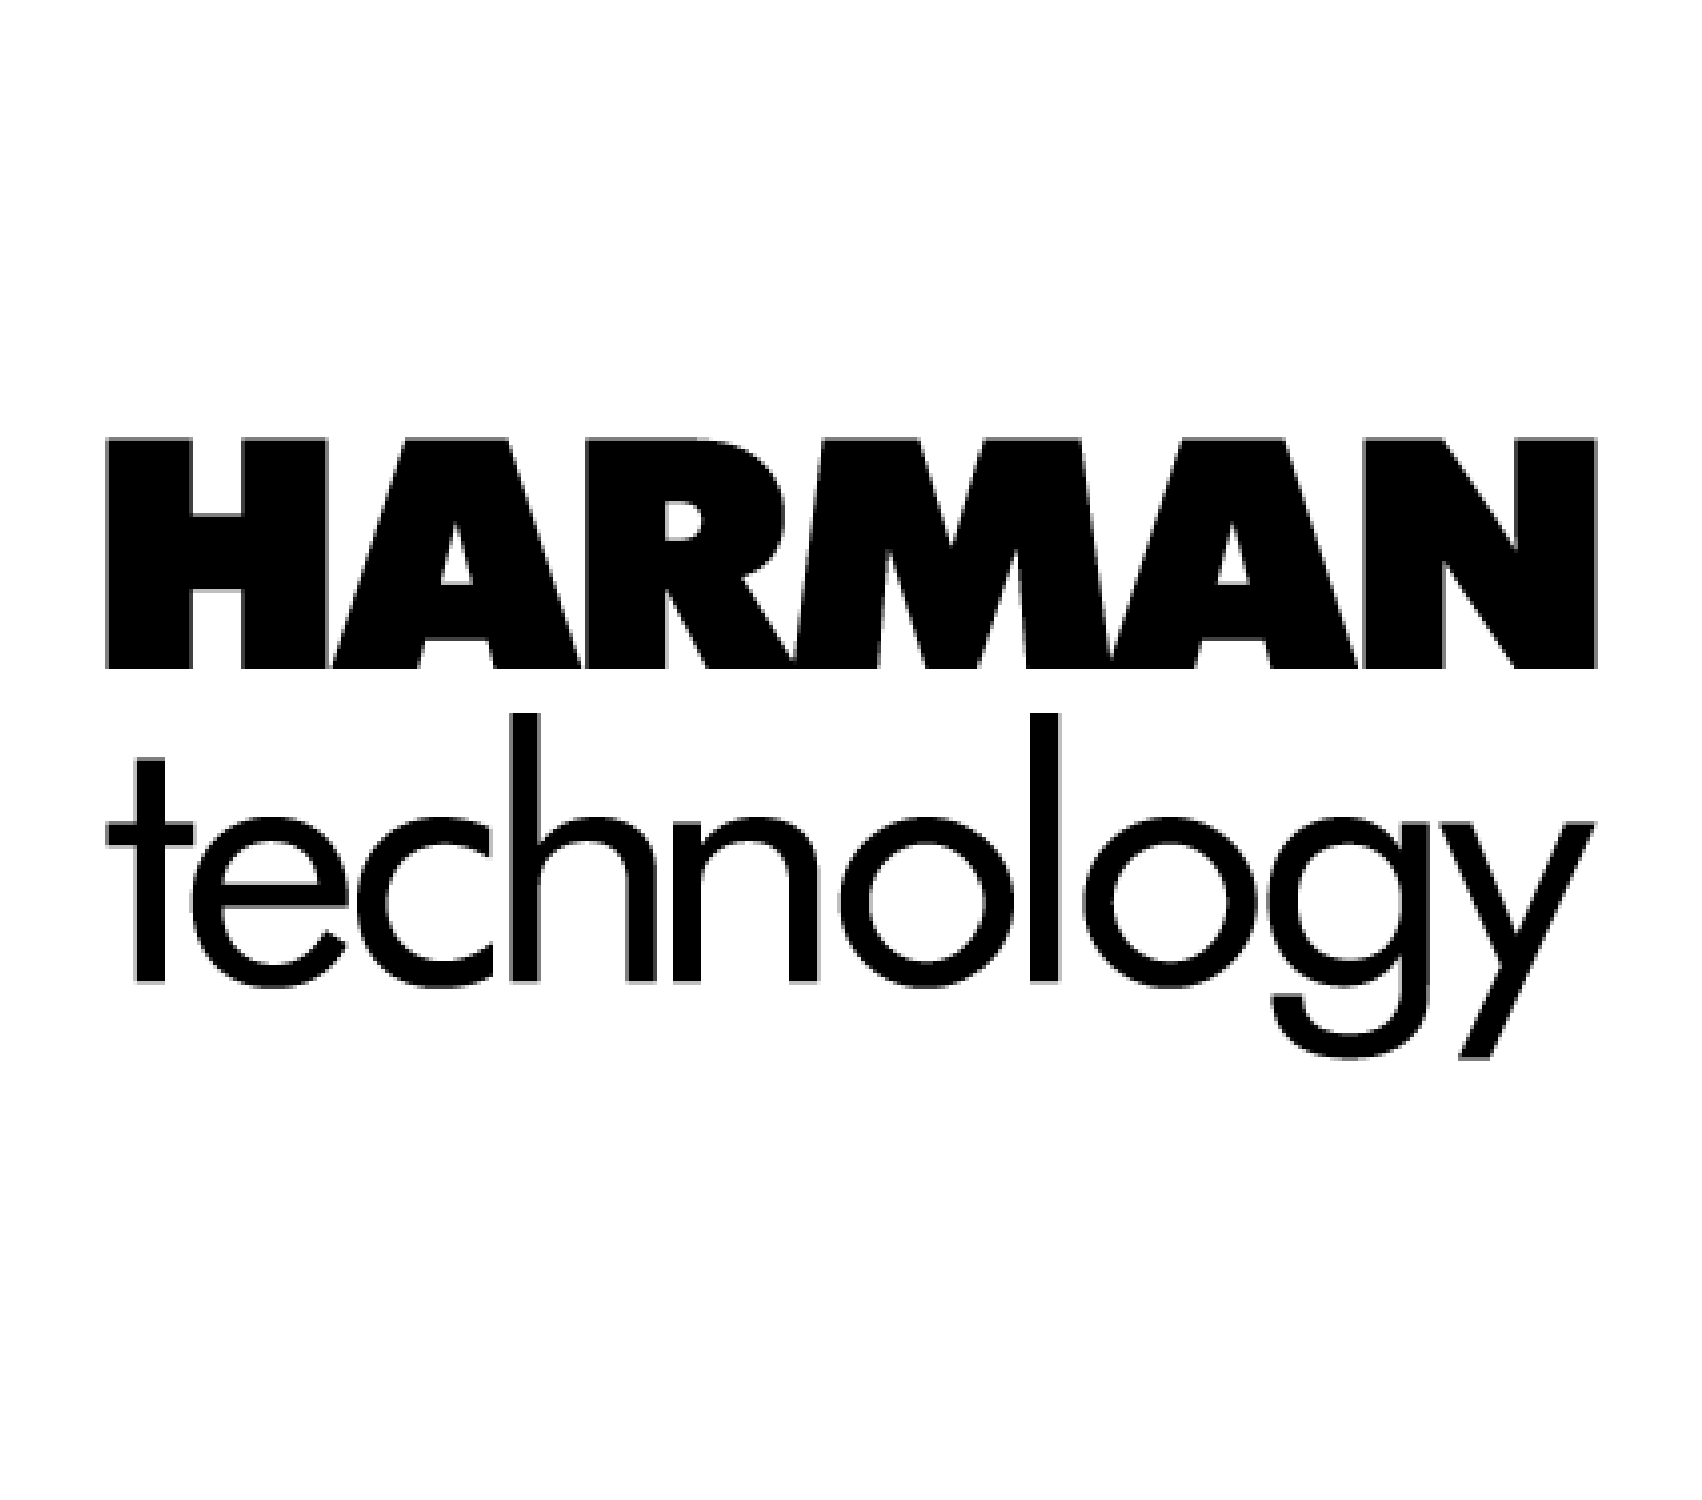 Harman technology logo